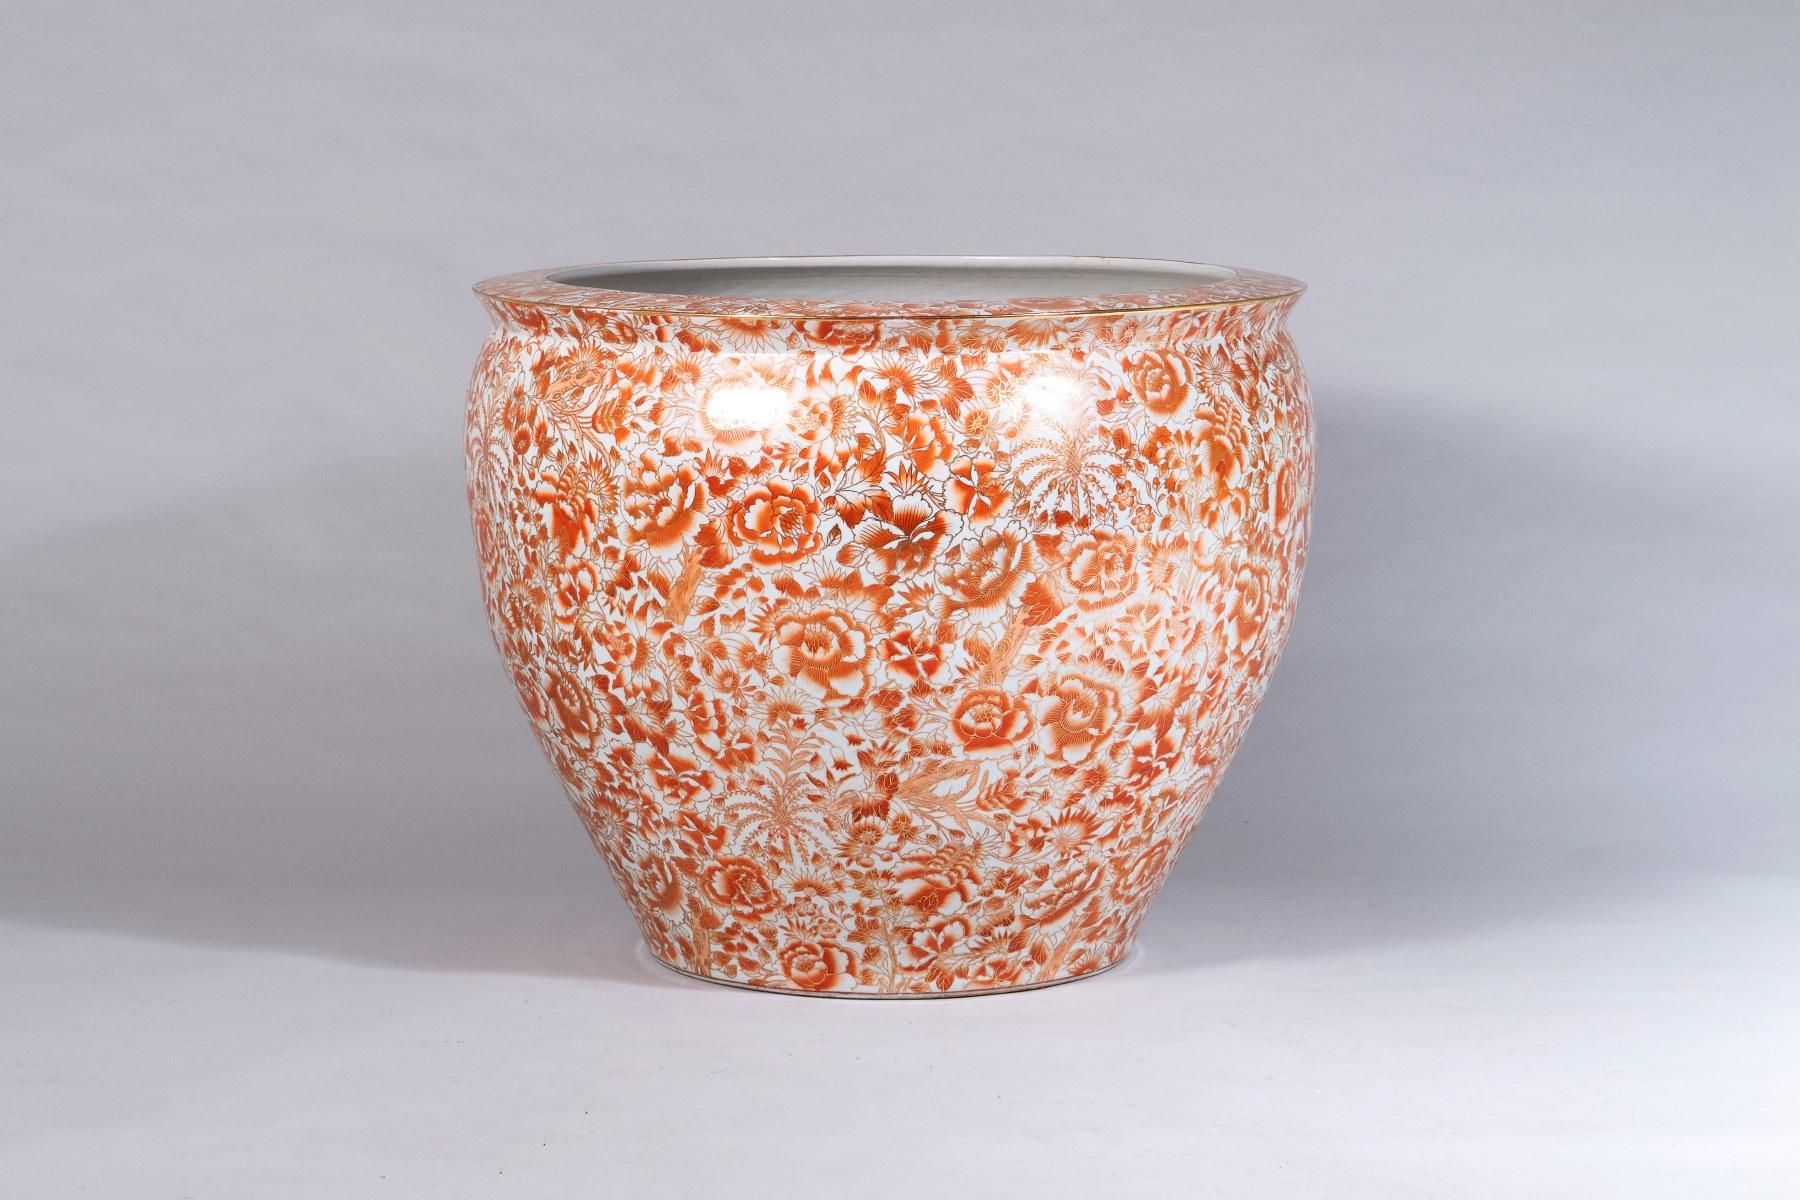 East Asian Huge Scale 32″ Decorative Chinese Porcelain Fish Bowl Jardinière Planter For Sale